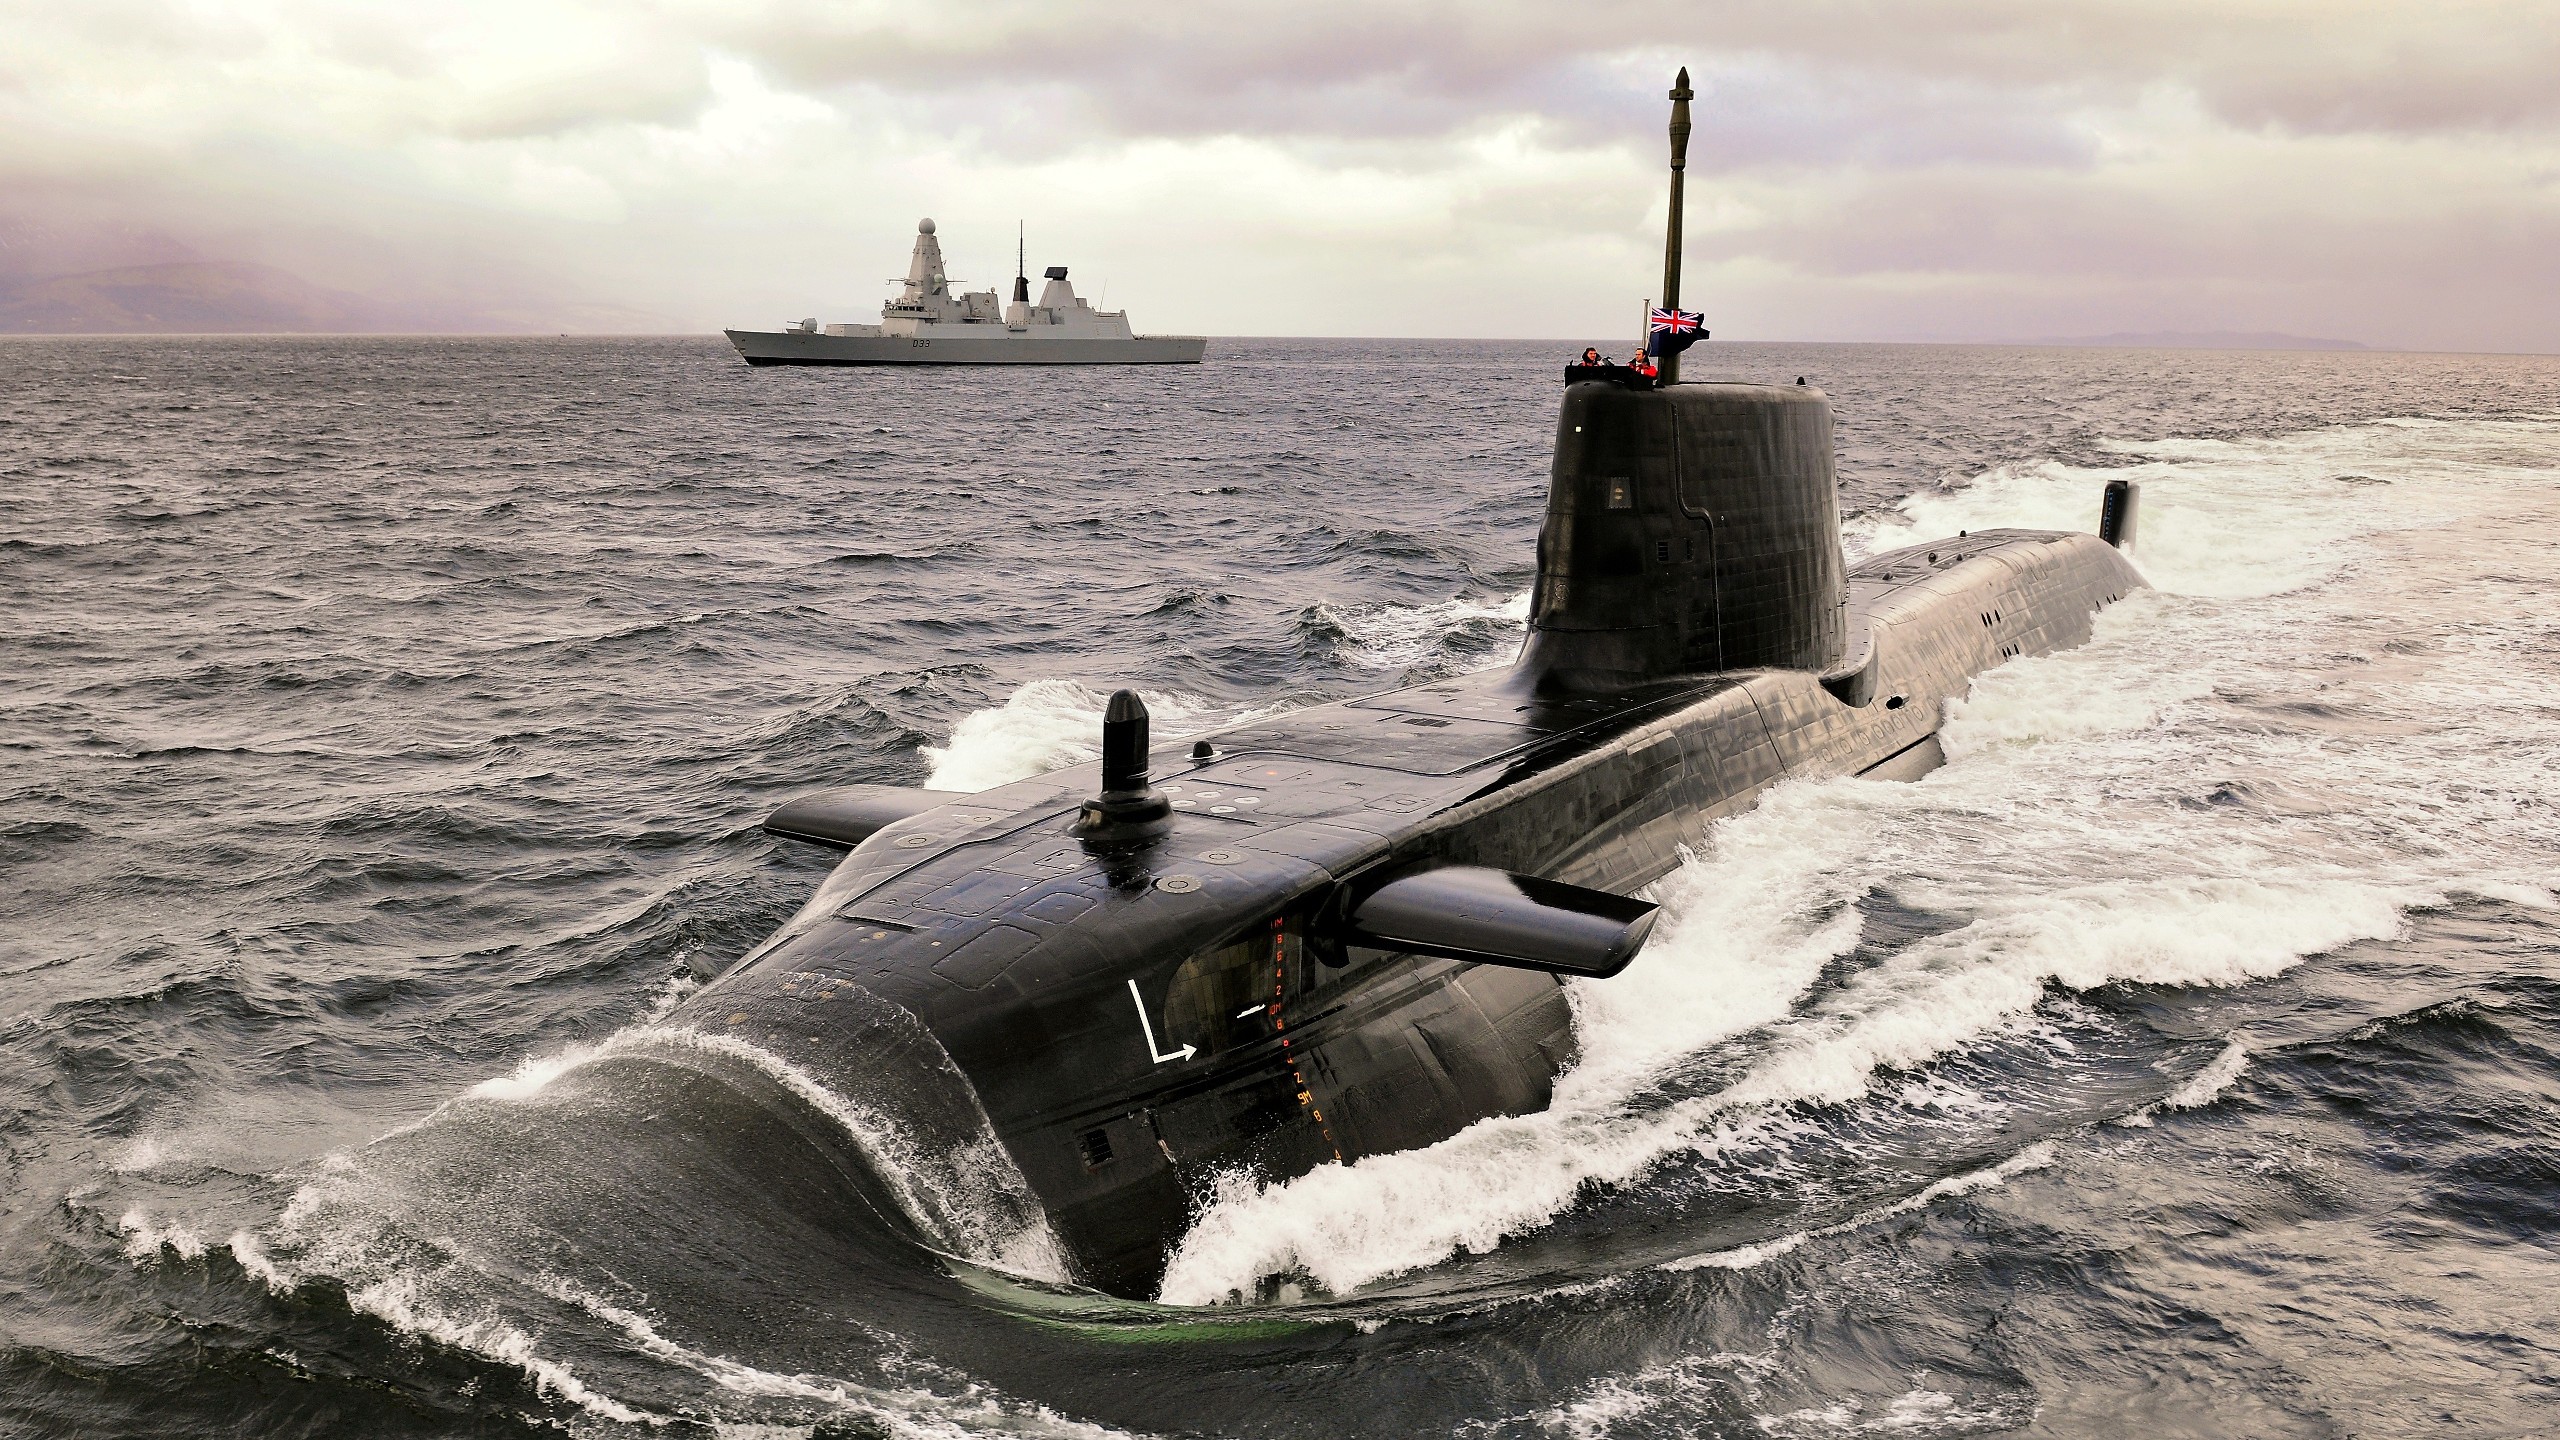 Military Submarine Navy Astute Class Submarine Royal Navy Destroyer Ship 2560x1440